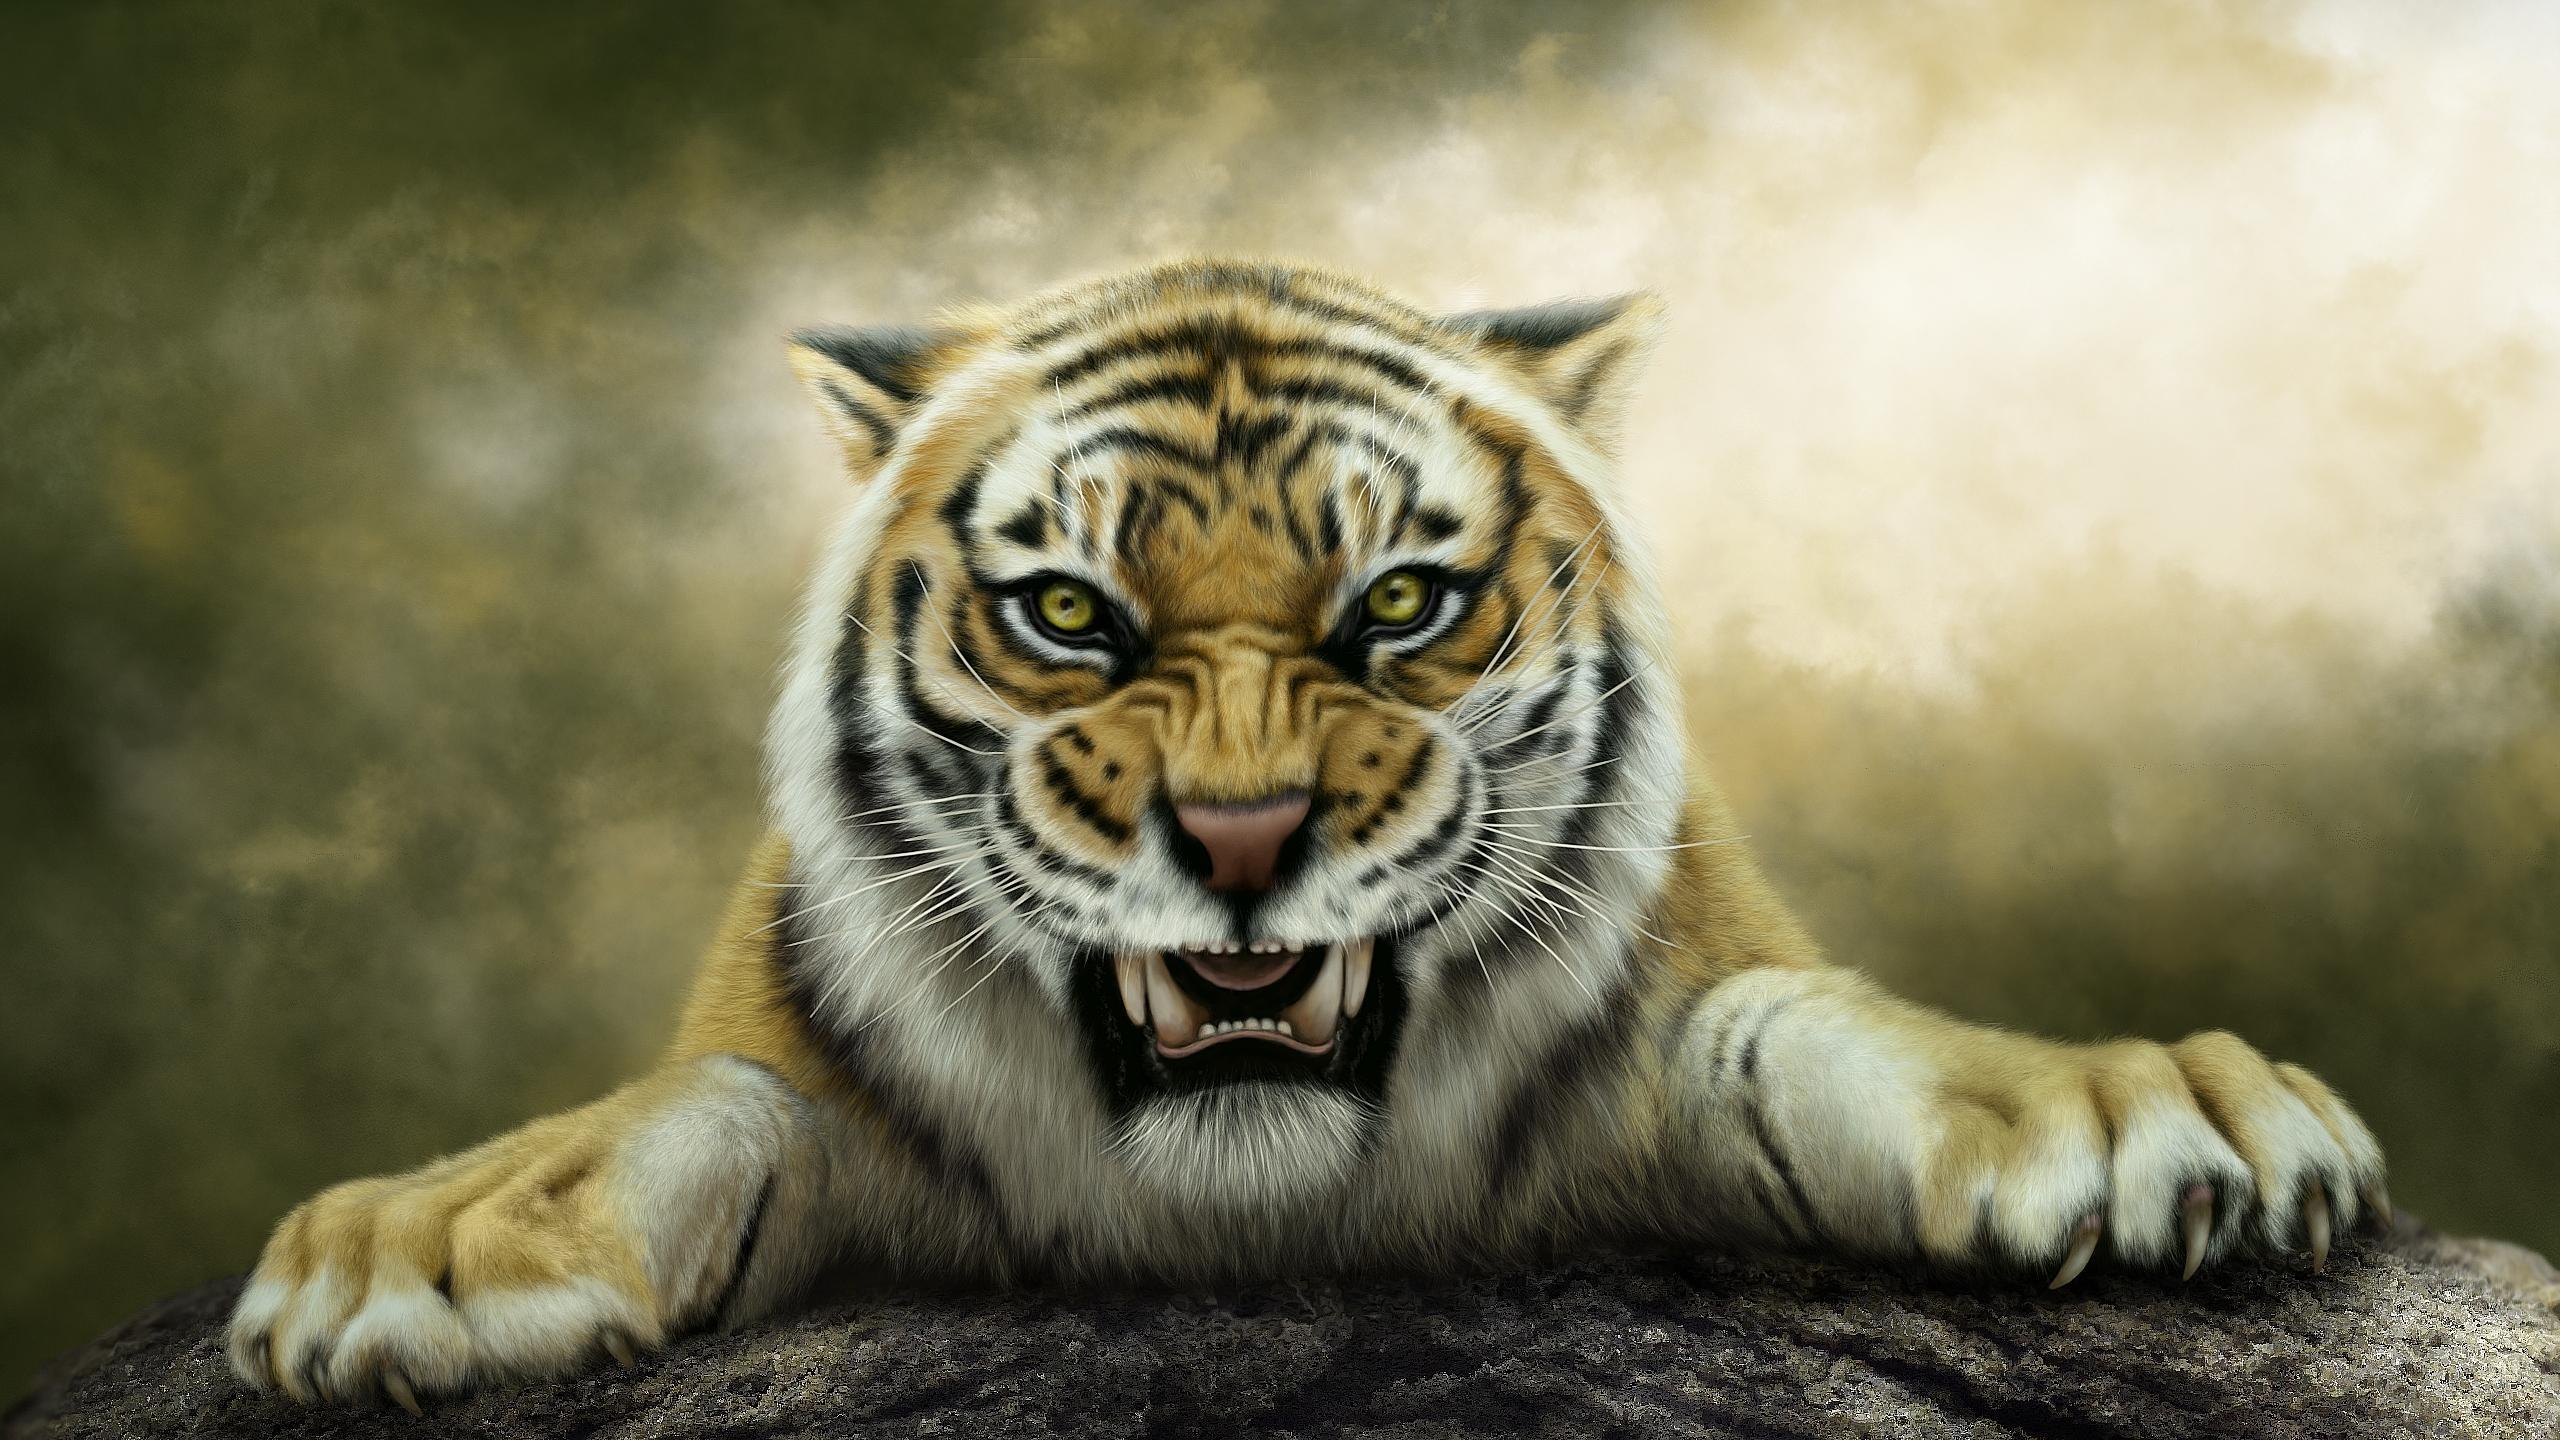 #Artwork, #Tiger, #Roaring